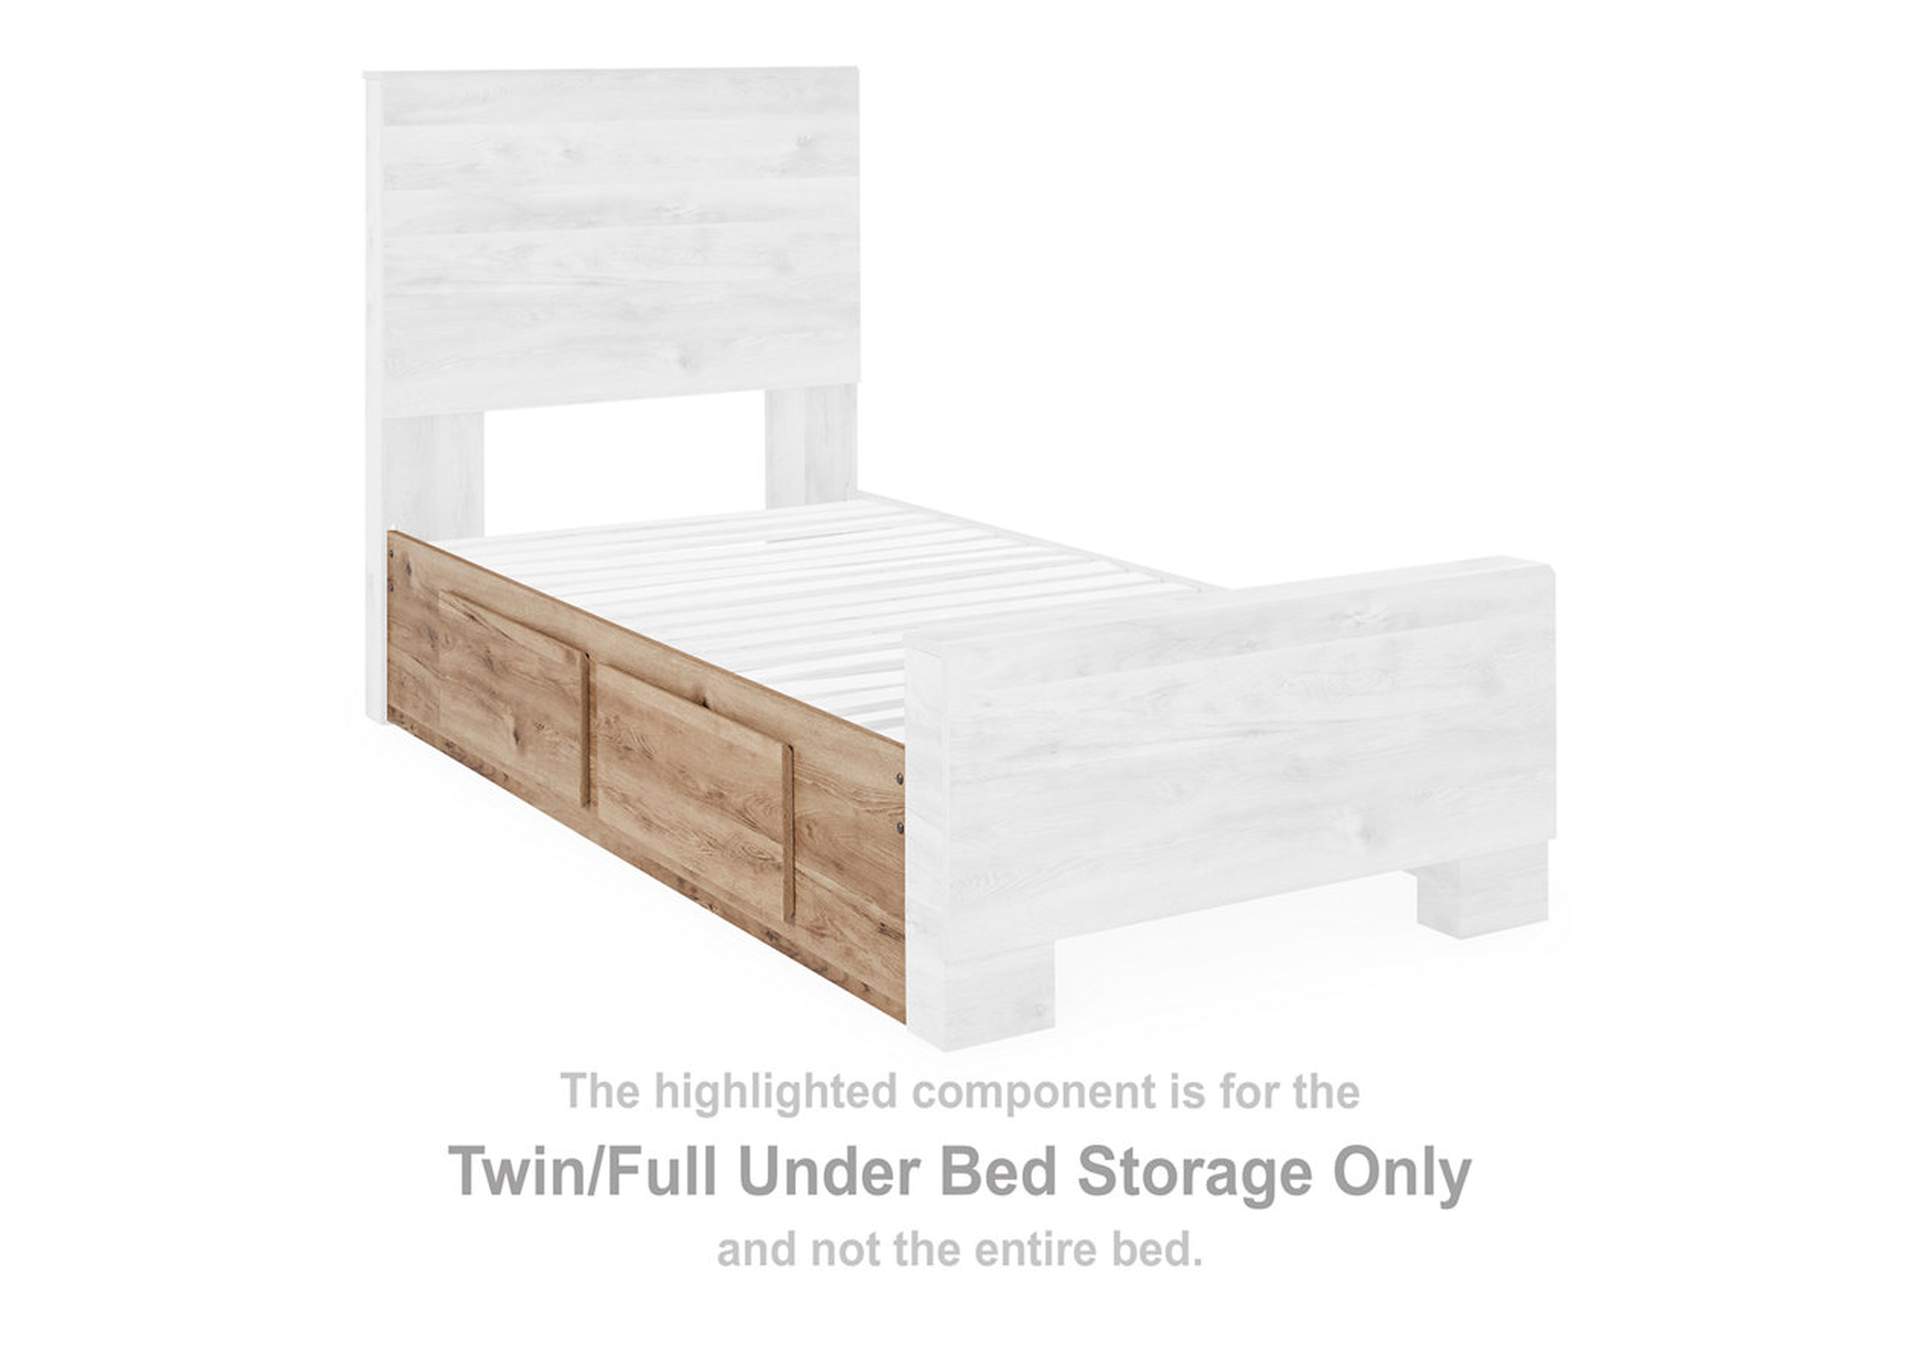 Hyanna Twin/Full Under Bed Storage,Signature Design By Ashley